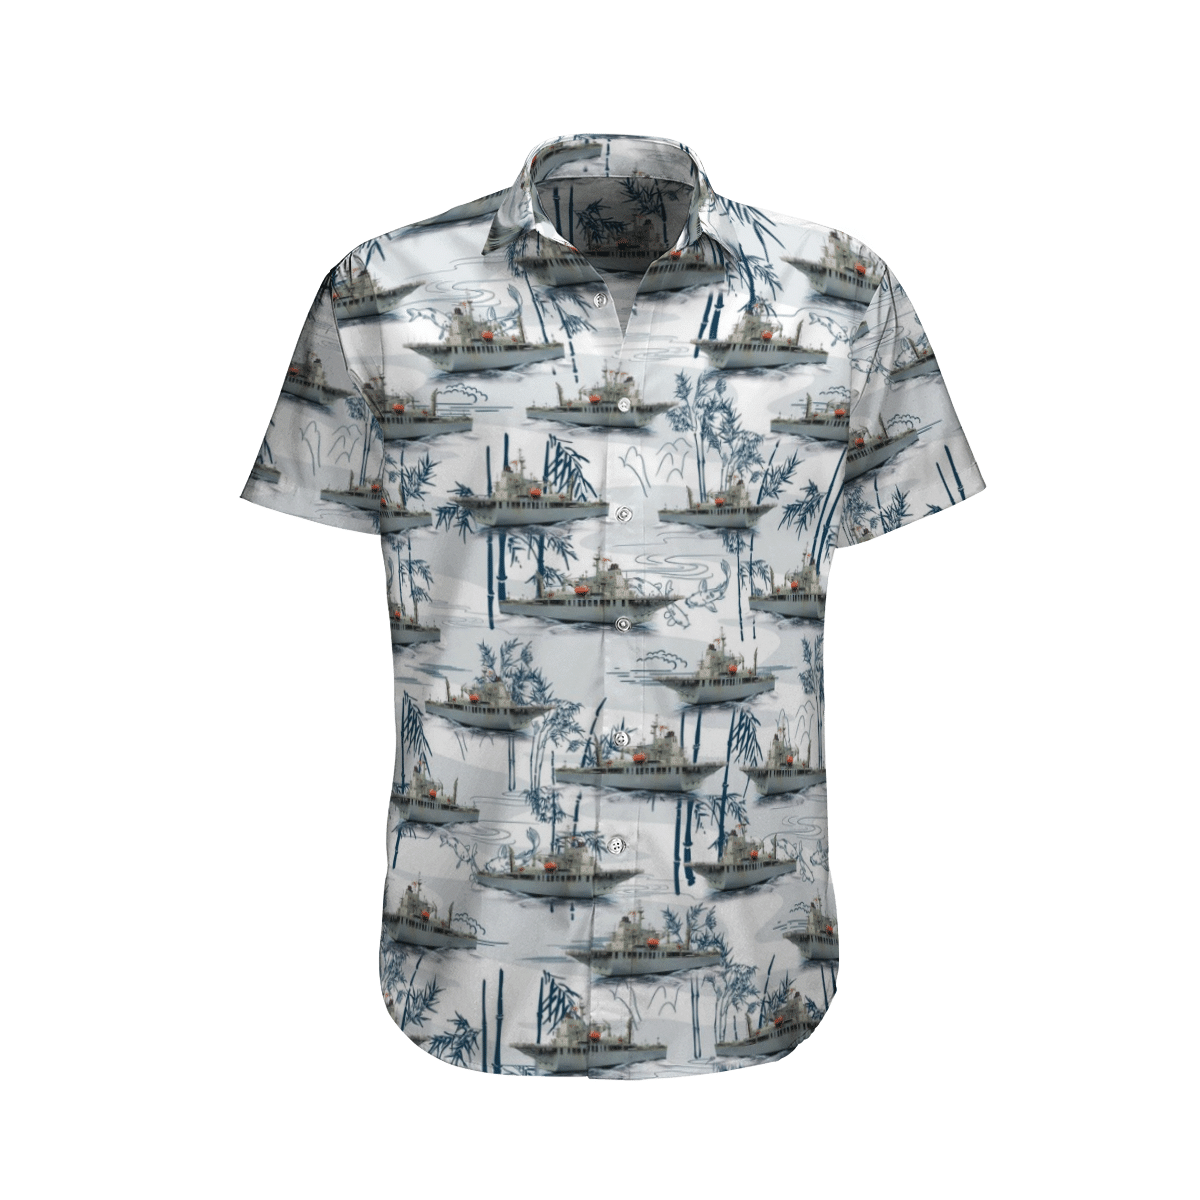 Enjoy your summer with top cool hawaiian shirt below 284